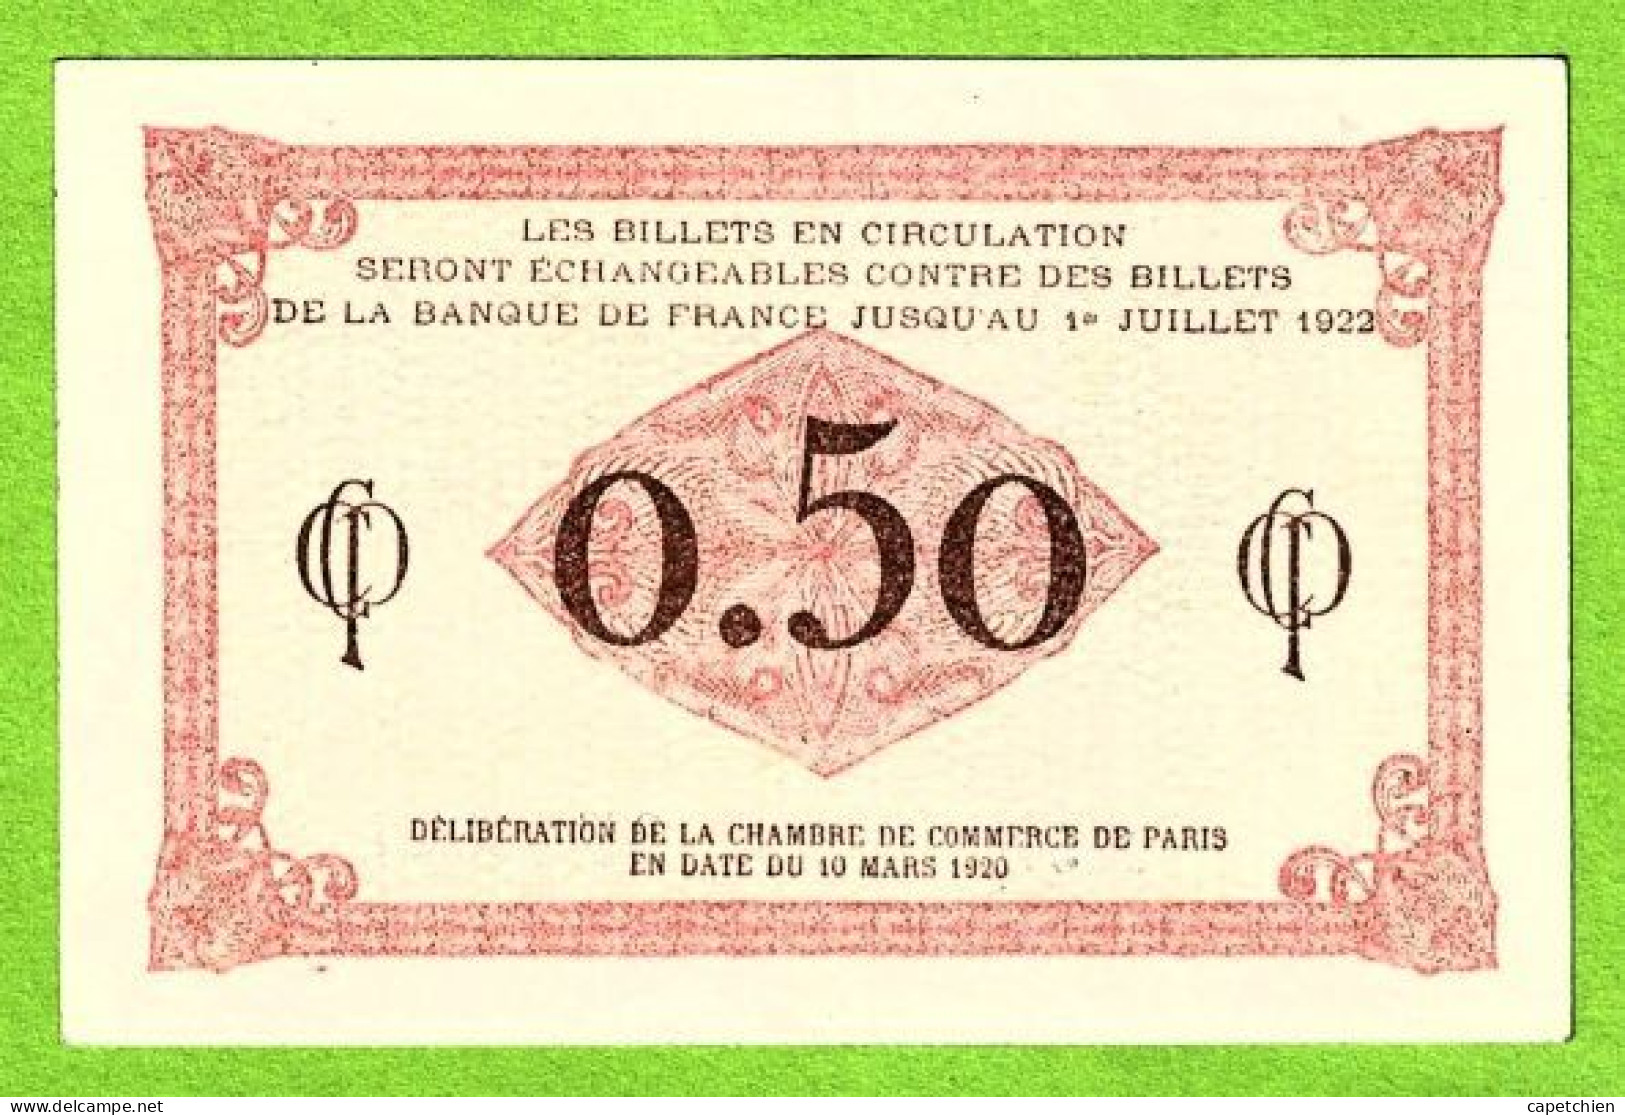 FRANCE / CHAMBRE De COMMERCE De PARIS / 50 CENT. / 10 MARS 1920 / N° 071,881 / SERIE F 37 / NEUF - Handelskammer